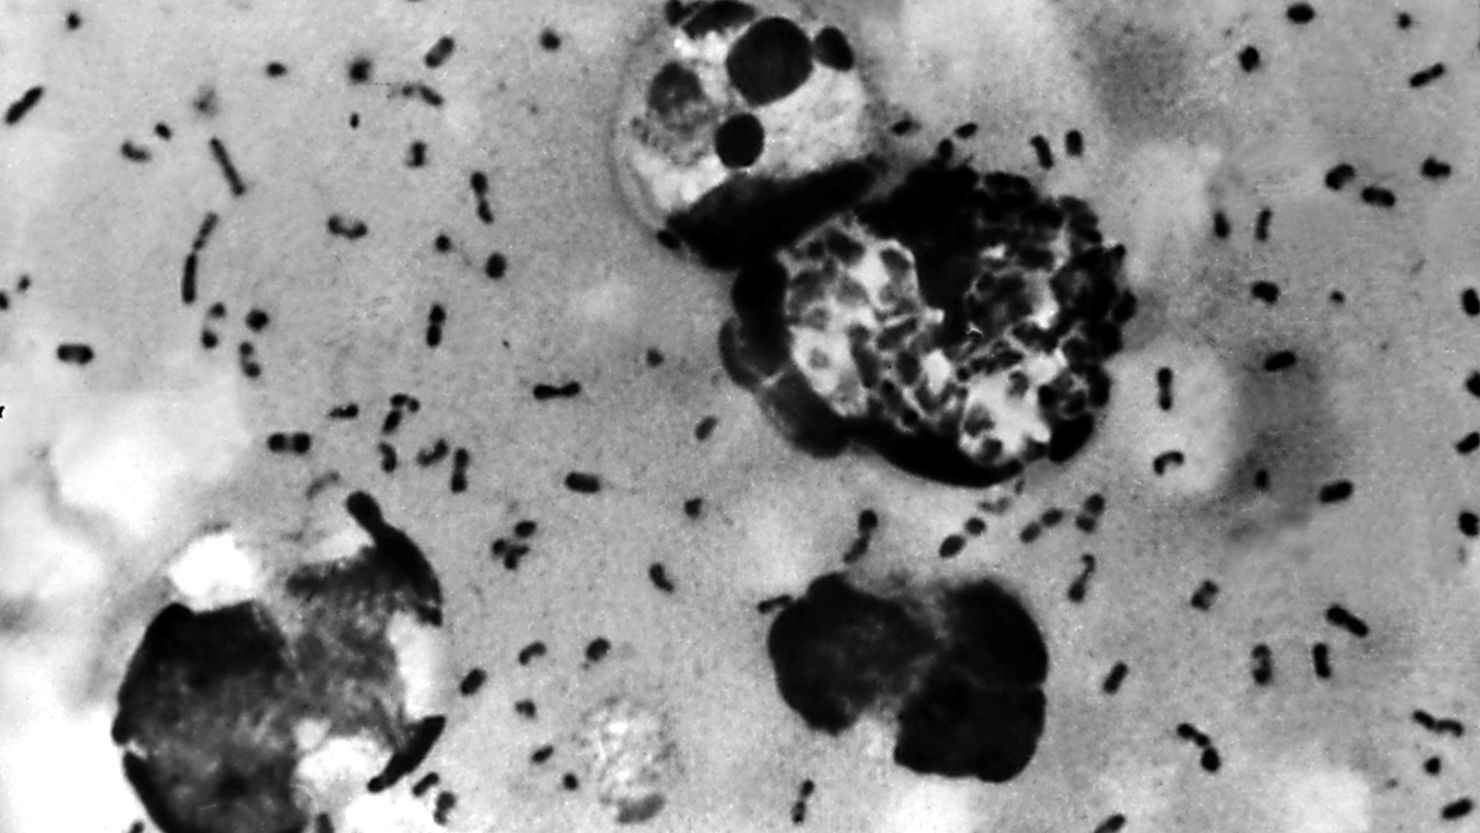 The Yersinia pestis bacteria that causes the plague.